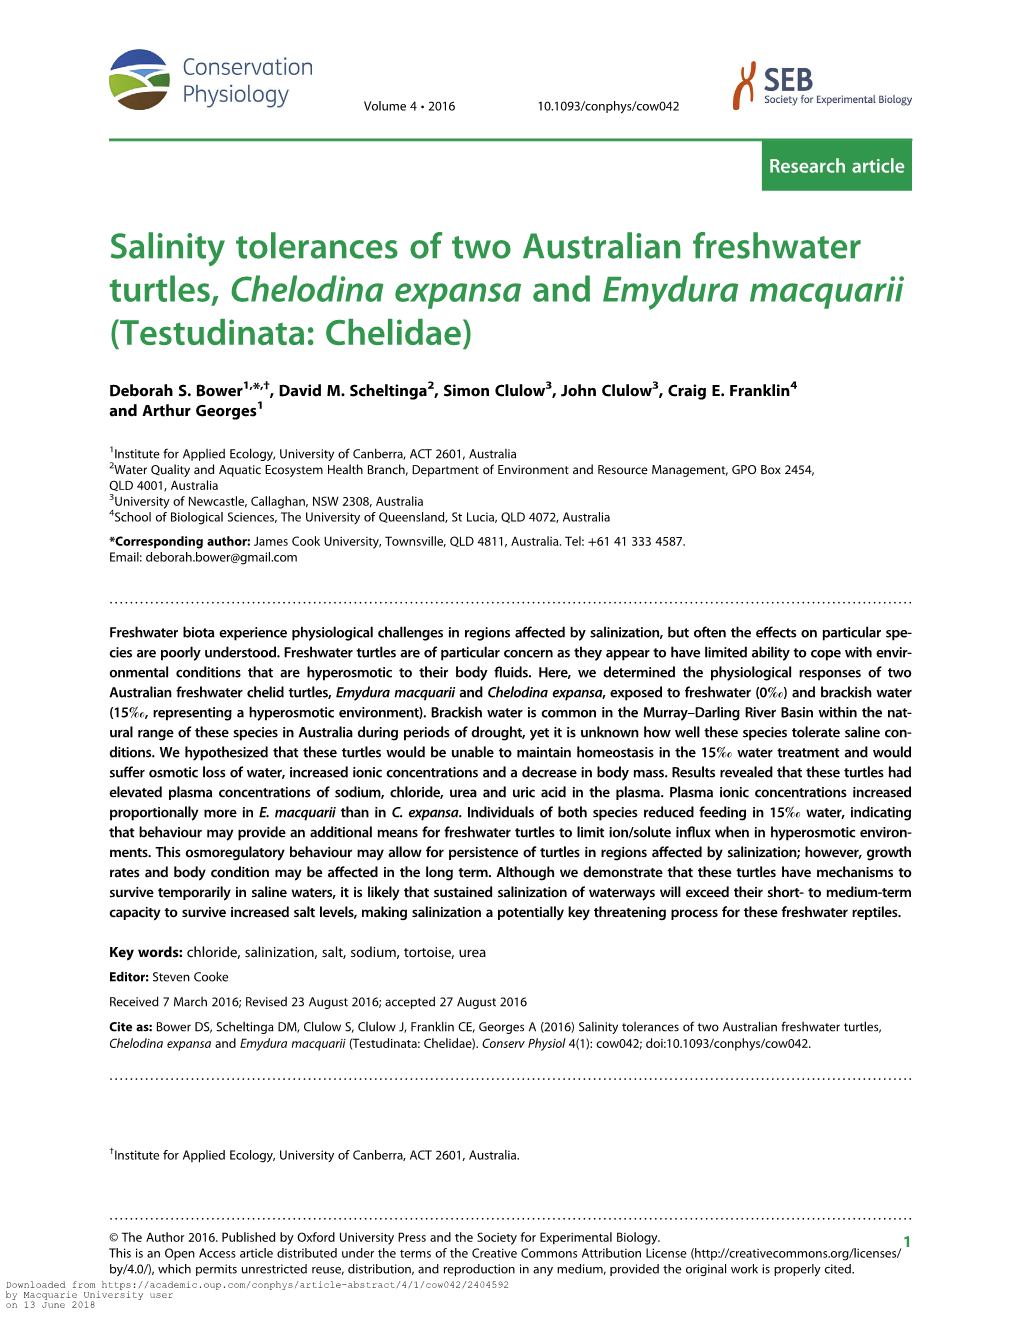 Salinity Tolerances of Two Australian Freshwater Turtles, Chelodina Expansa and Emydura Macquarii (Testudinata: Chelidae)